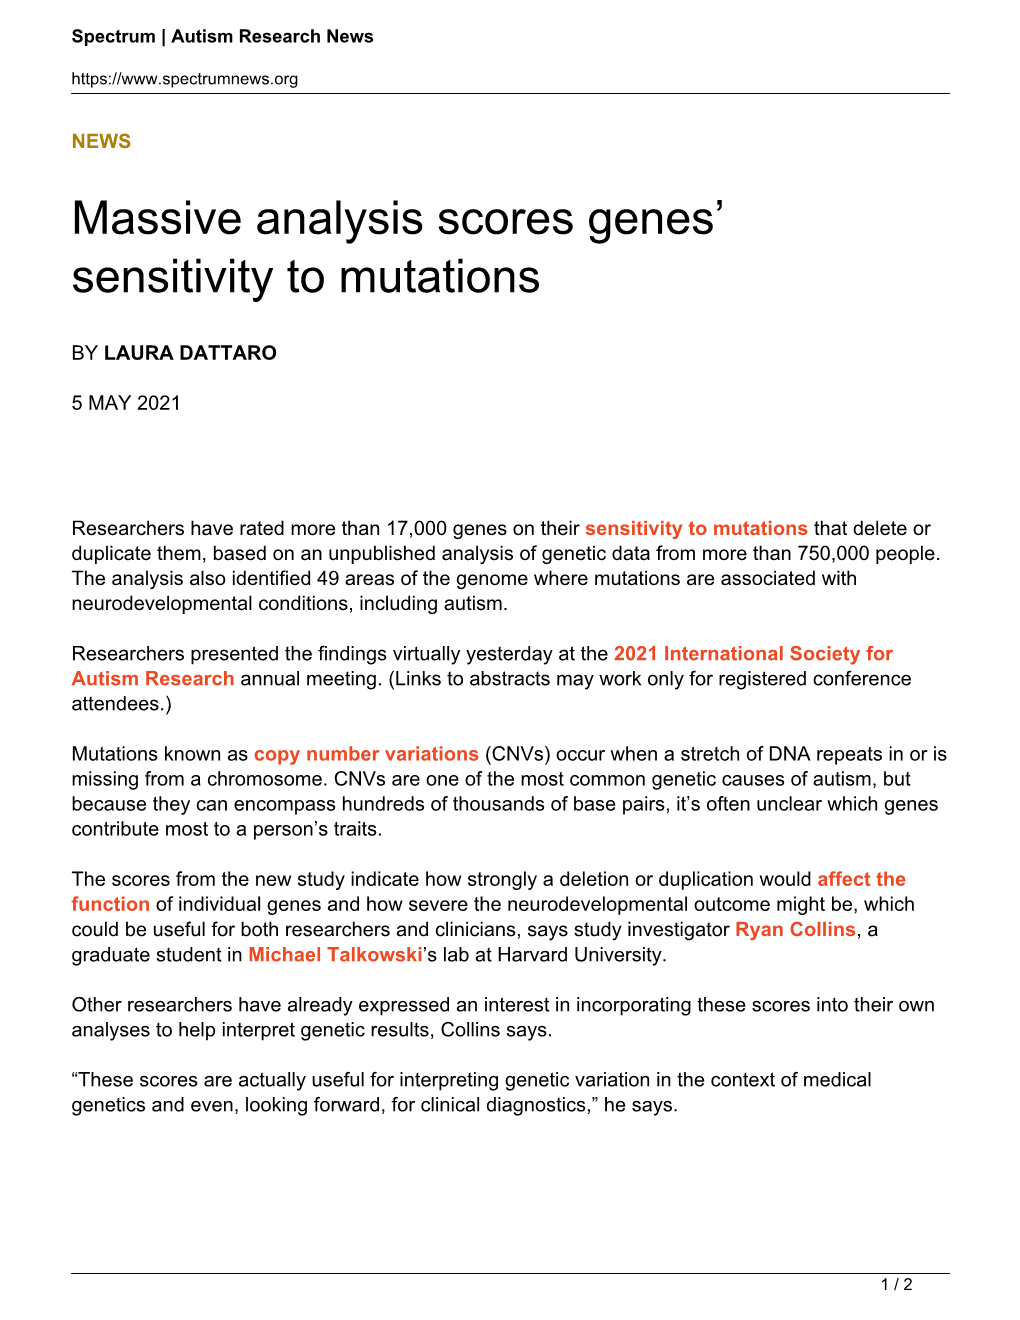 Massive Analysis Scores Genes' Sensitivity to Mutations